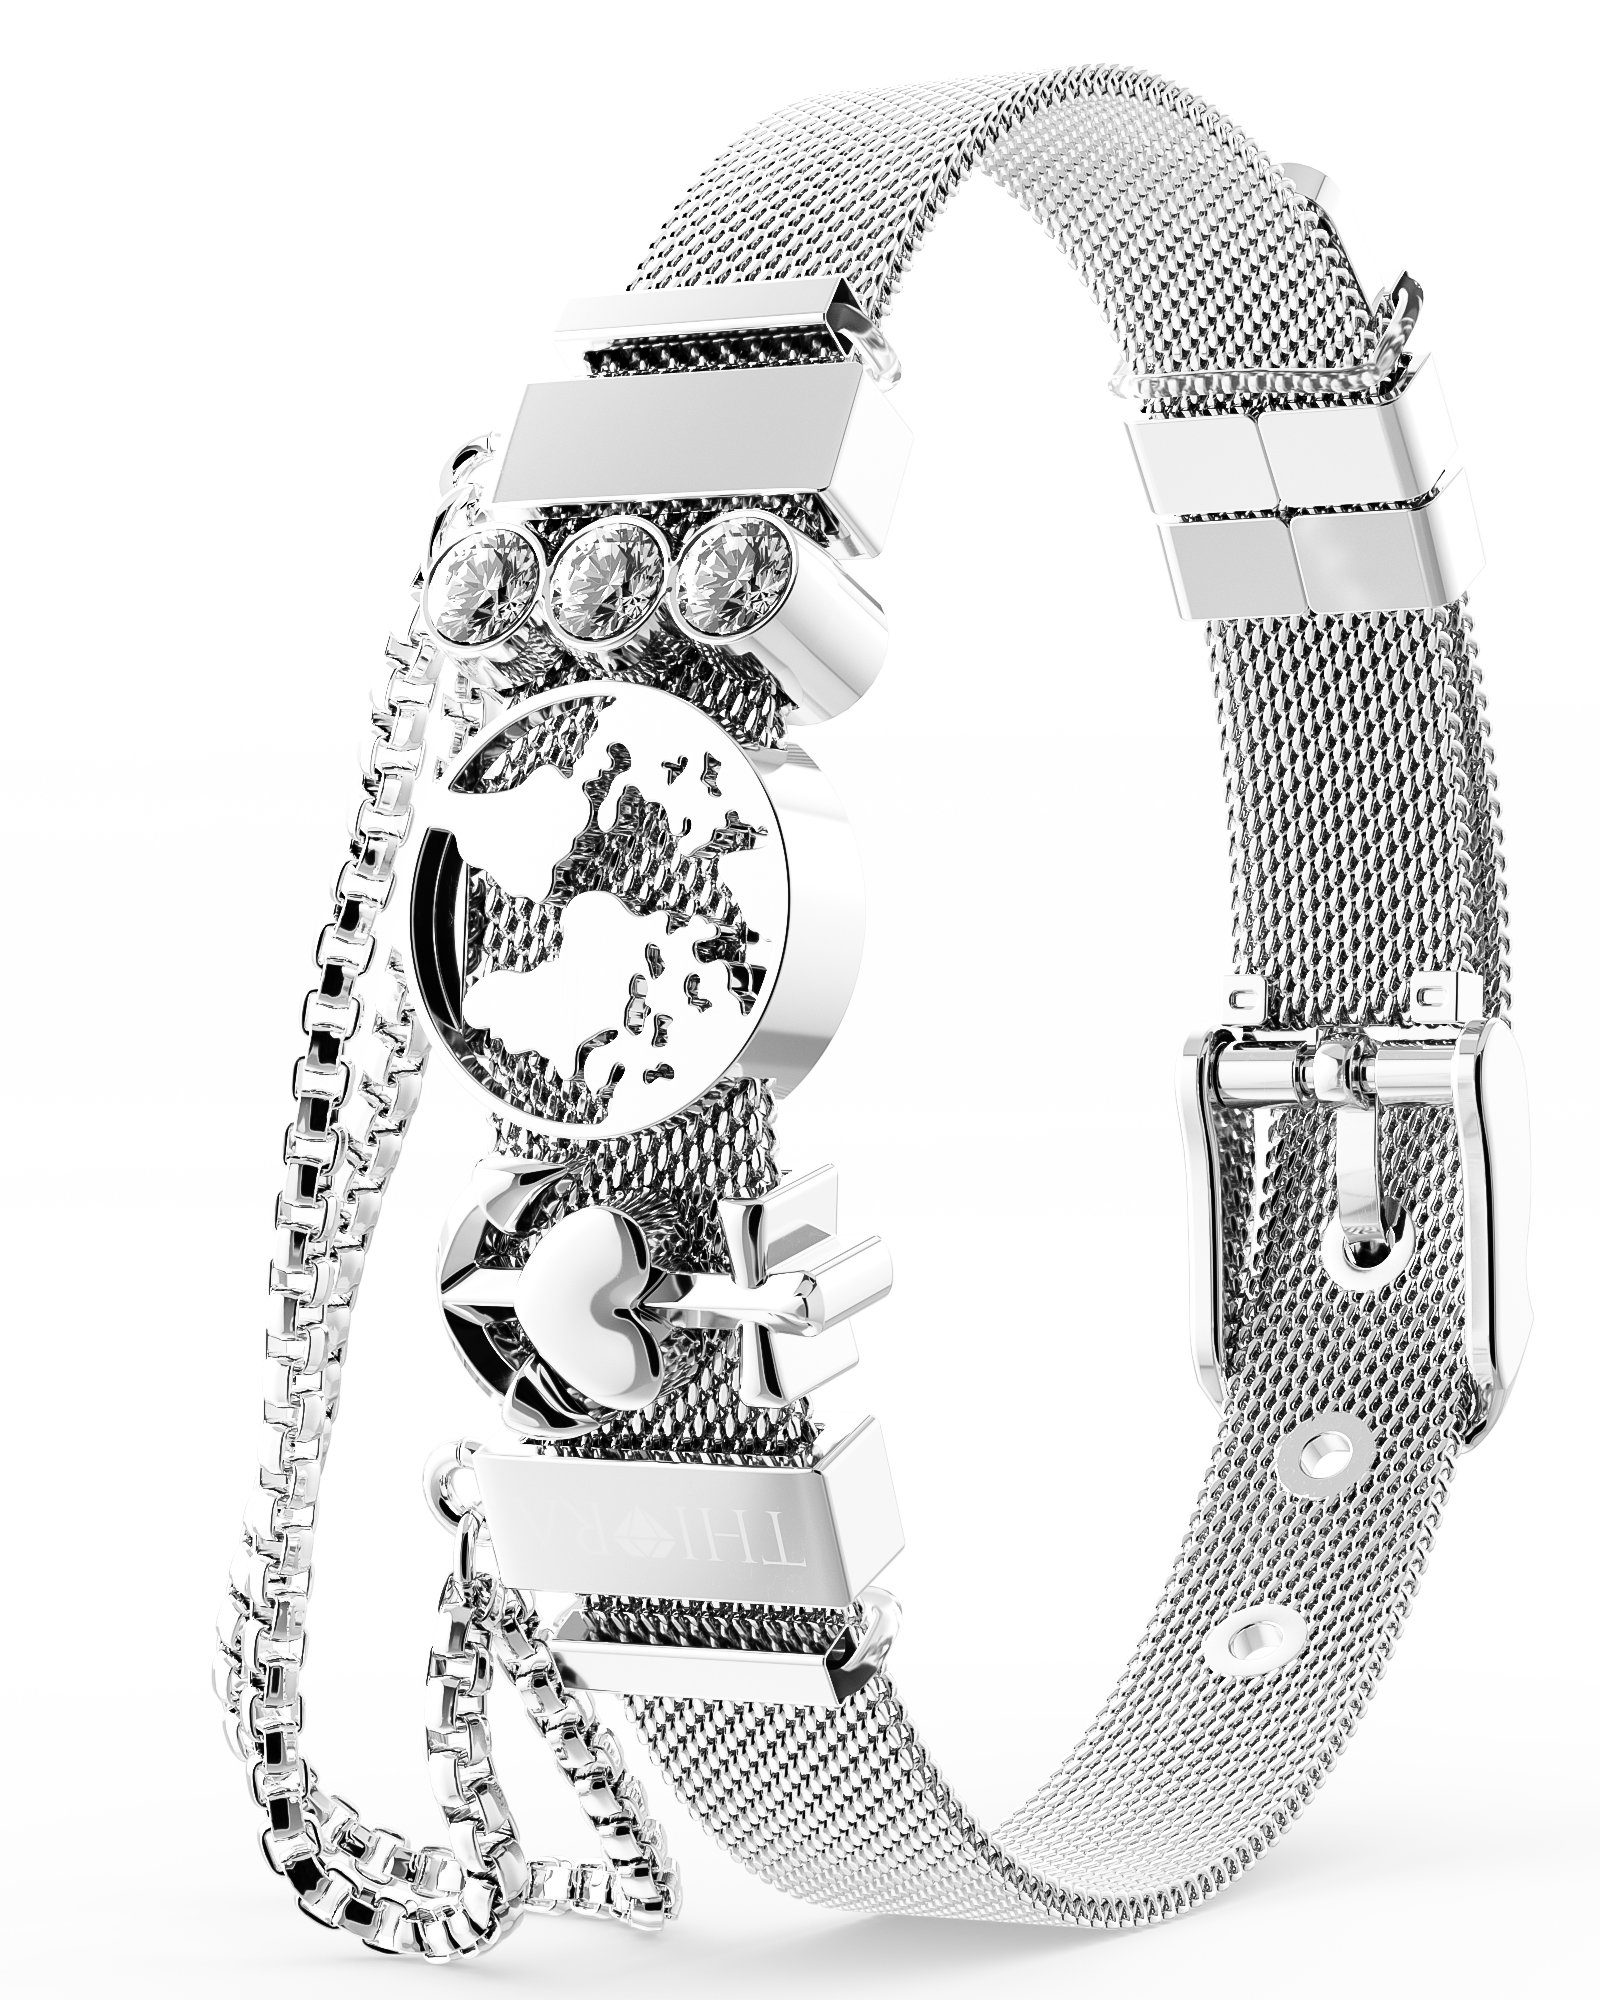 THIORA Charm-Armband Set Charmband Collection (Mesh Armband mit Charms, inkl. der im Hauptbild gezeigten Charms), Armband Set mit Anhängern